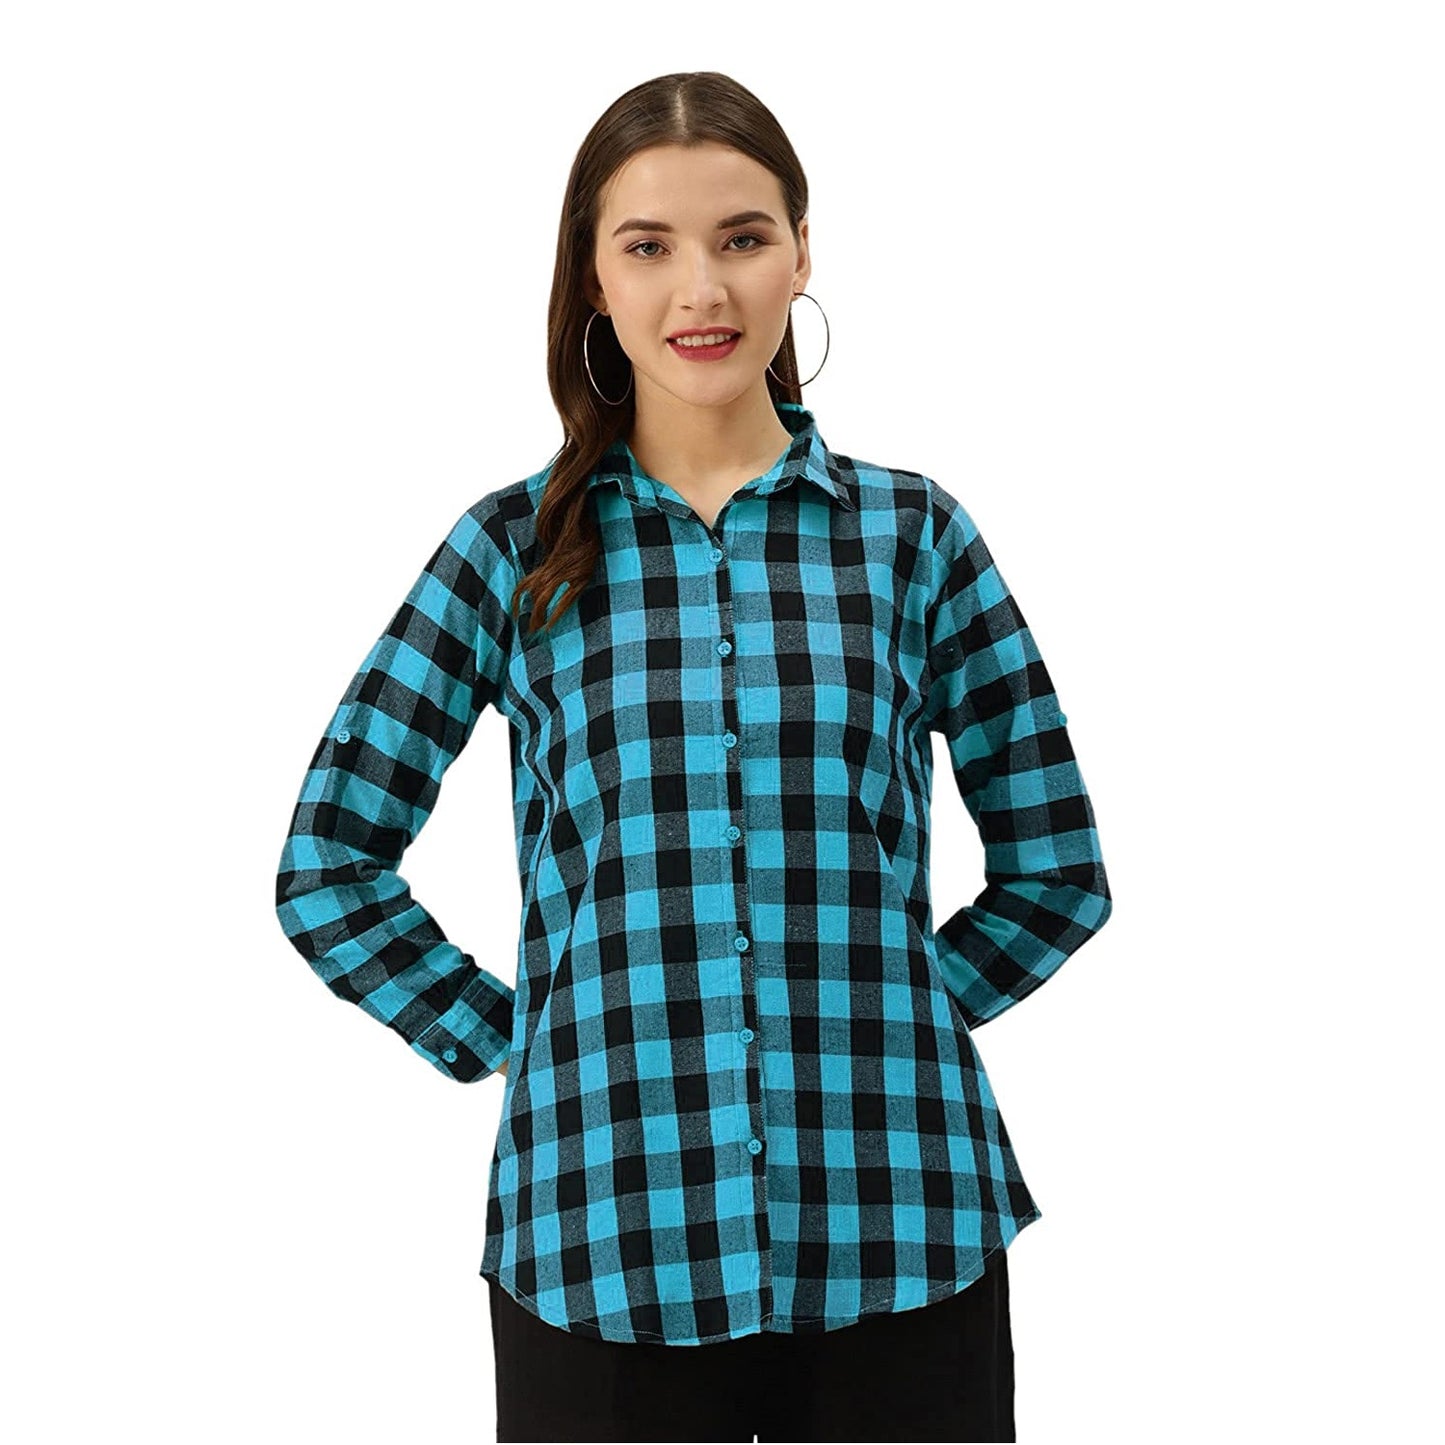 \Vastraa Fusion Women's Cotton Checkered Shirt